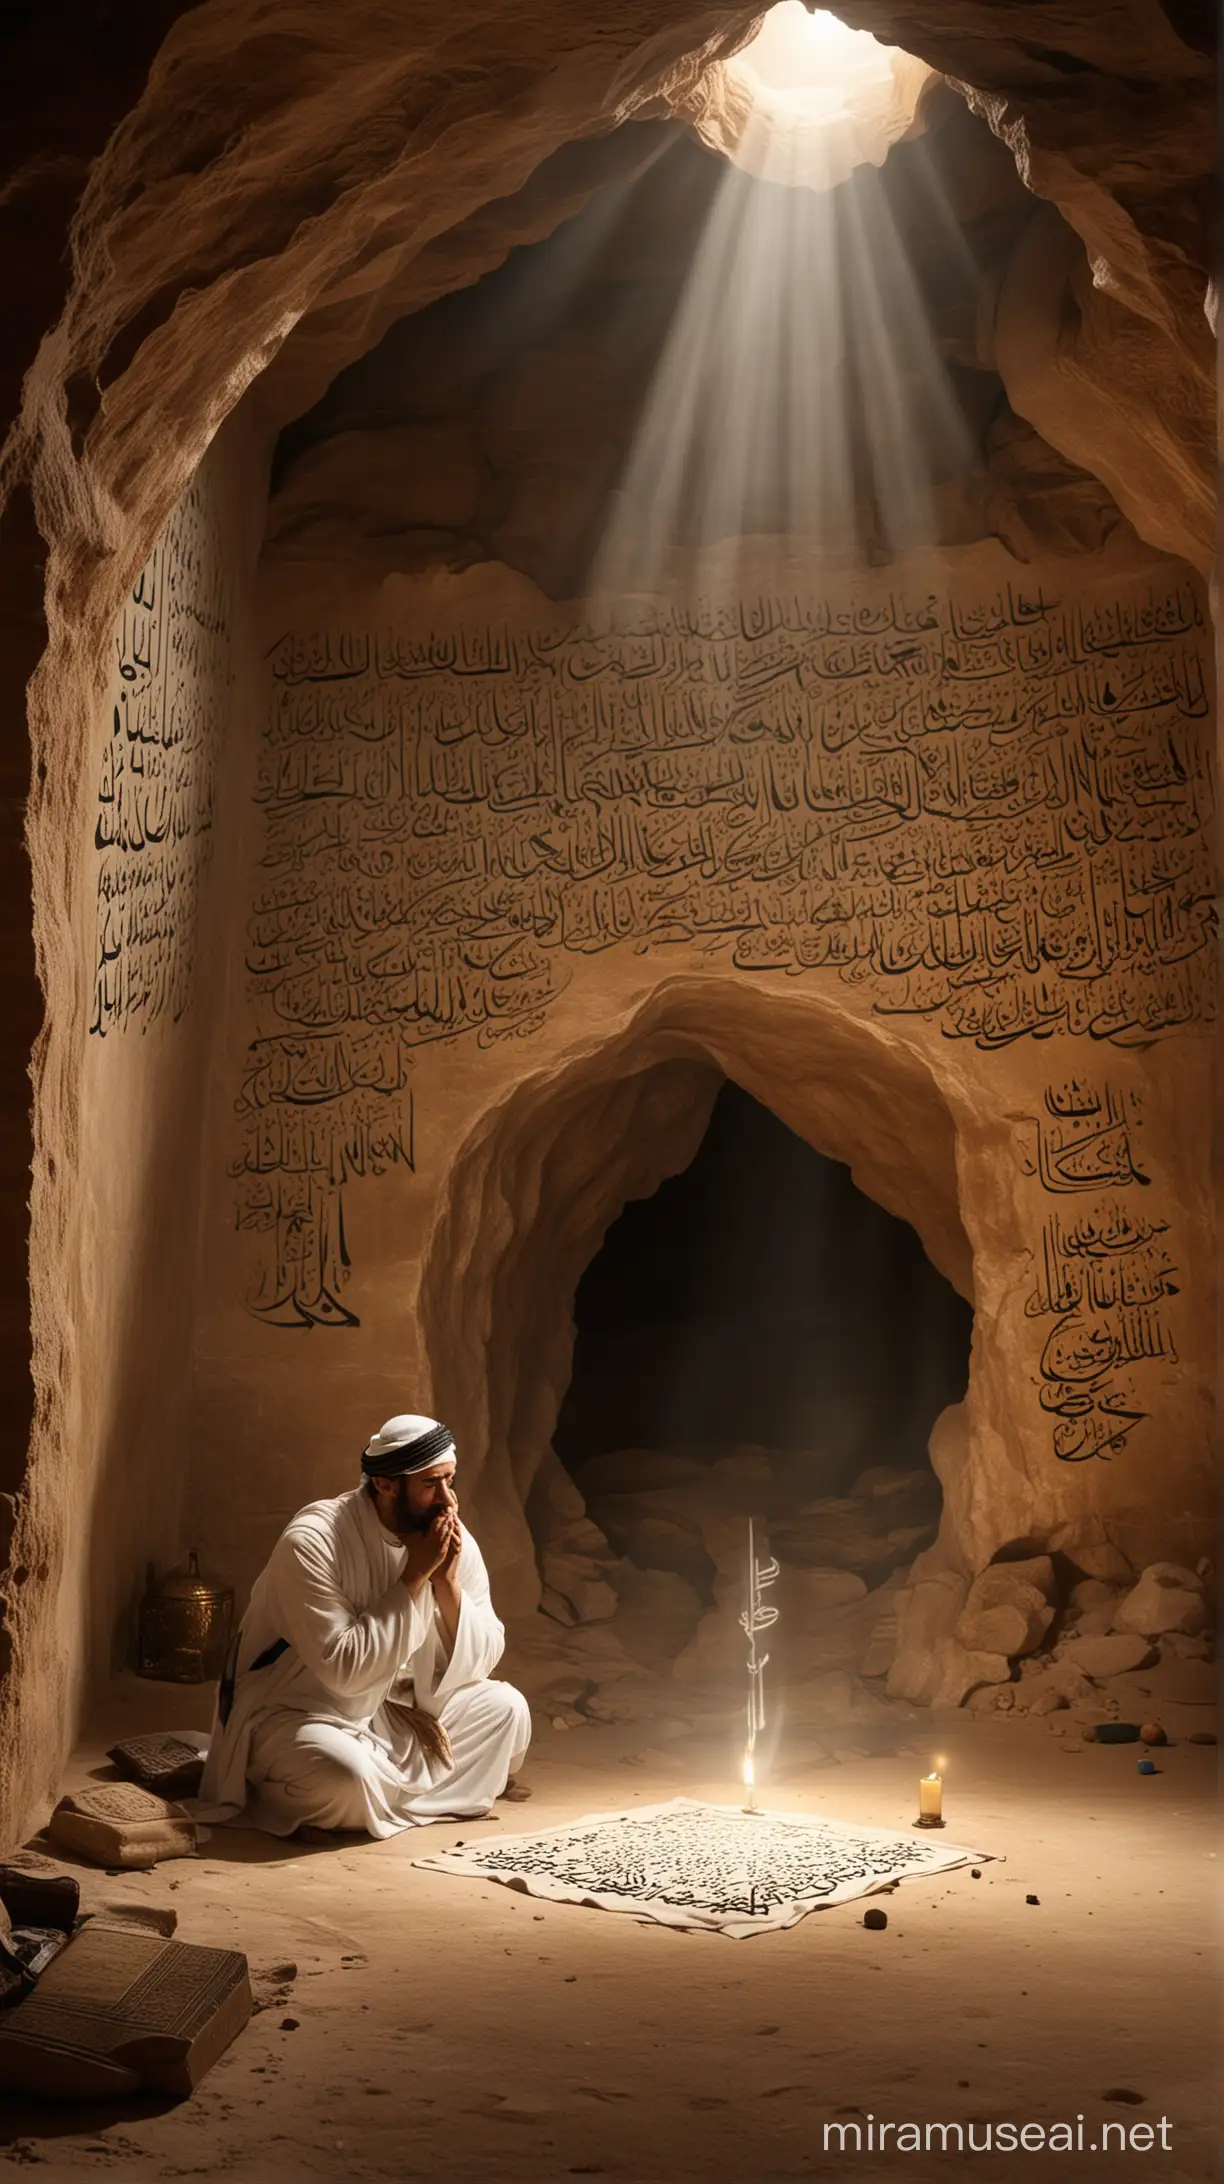 Prophet Muhammad PBUH Receives Divine Revelation in Dramatic Cave Setting